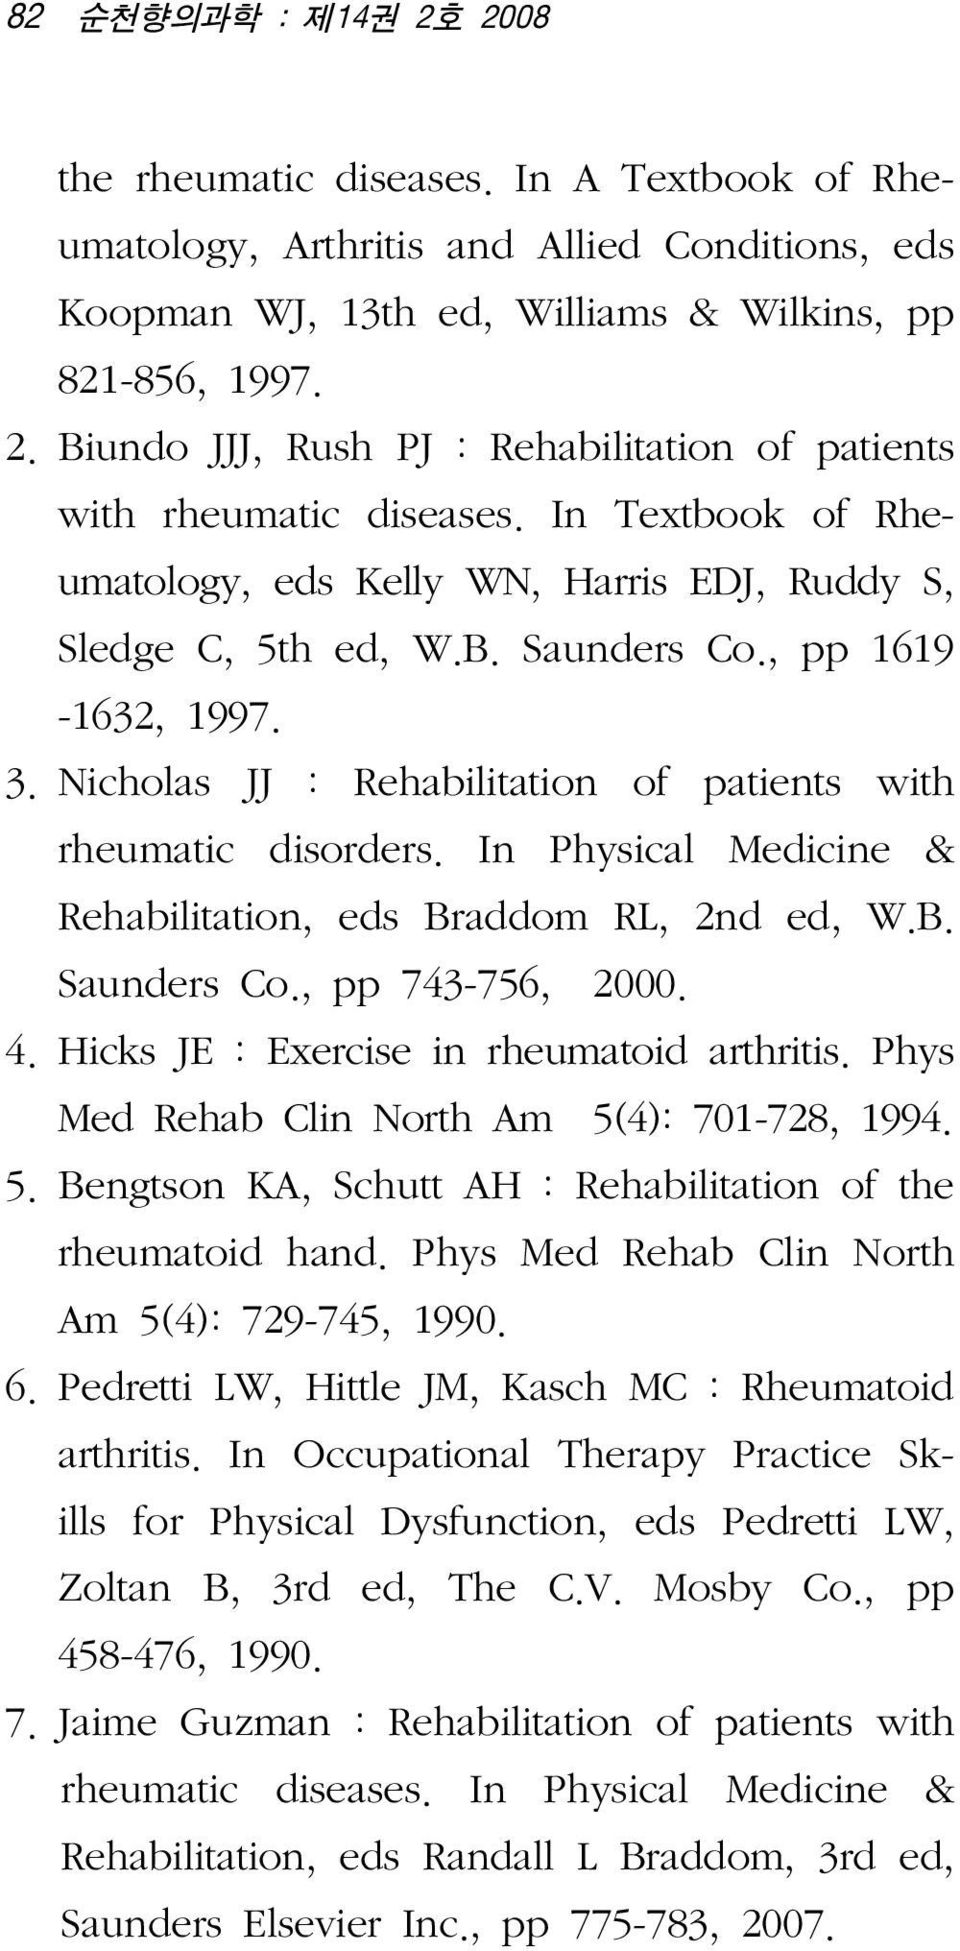 In Physical Medicine & Rehabilitation, eds Braddom RL, 2nd ed, W.B. Saunders Co., pp 743-756, 2000. 4.1Hicks JE : Exercise in rheumatoid arthritis. Phys Med Rehab Clin North Am 5(